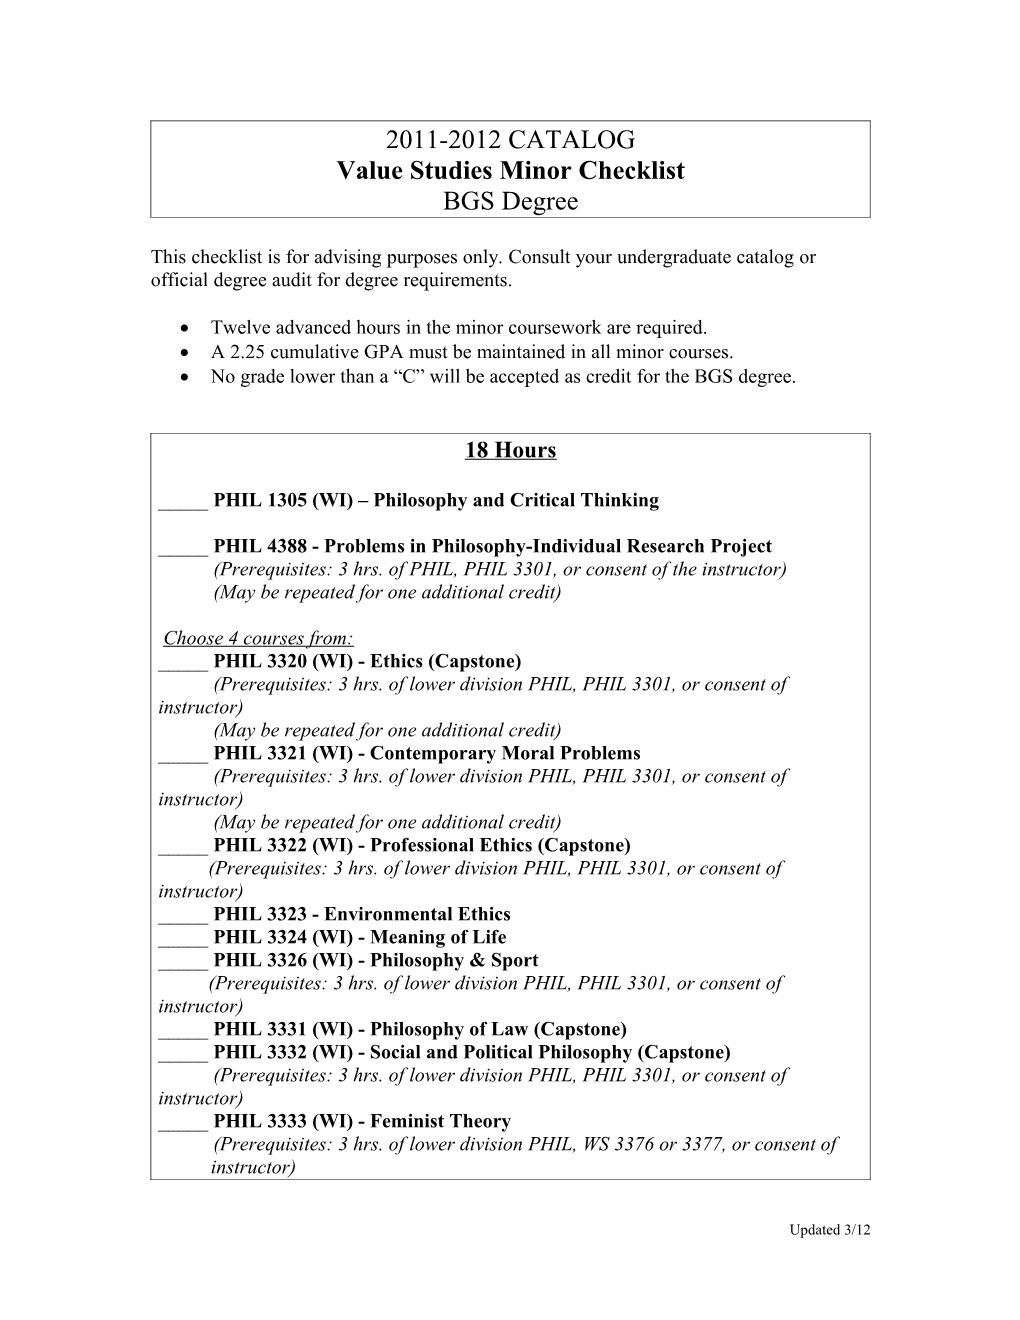 Value Studies Minor Checklist